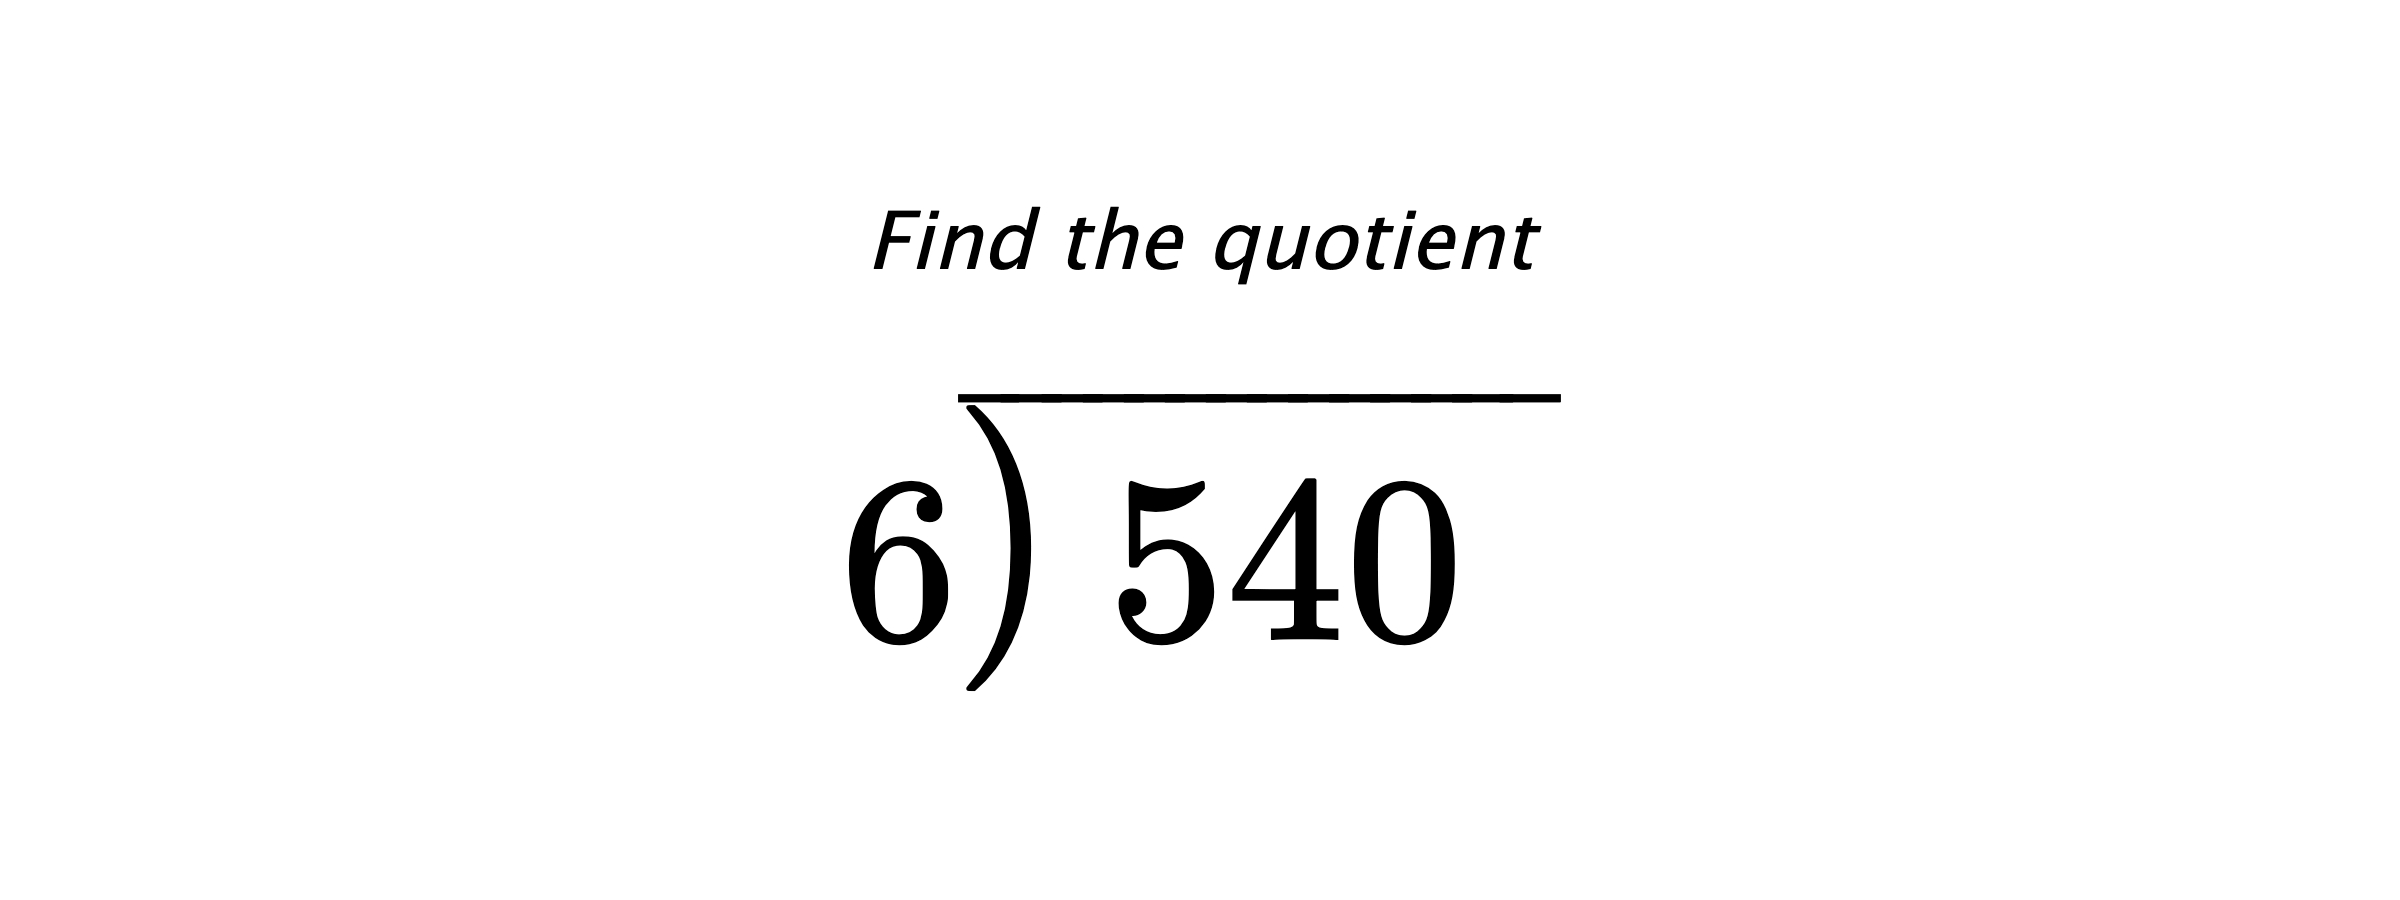 Find the quotient $ 6{\overline{\smash{\raise.3ex\hbox{$\big)$}}\,540\phantom{)}}} $